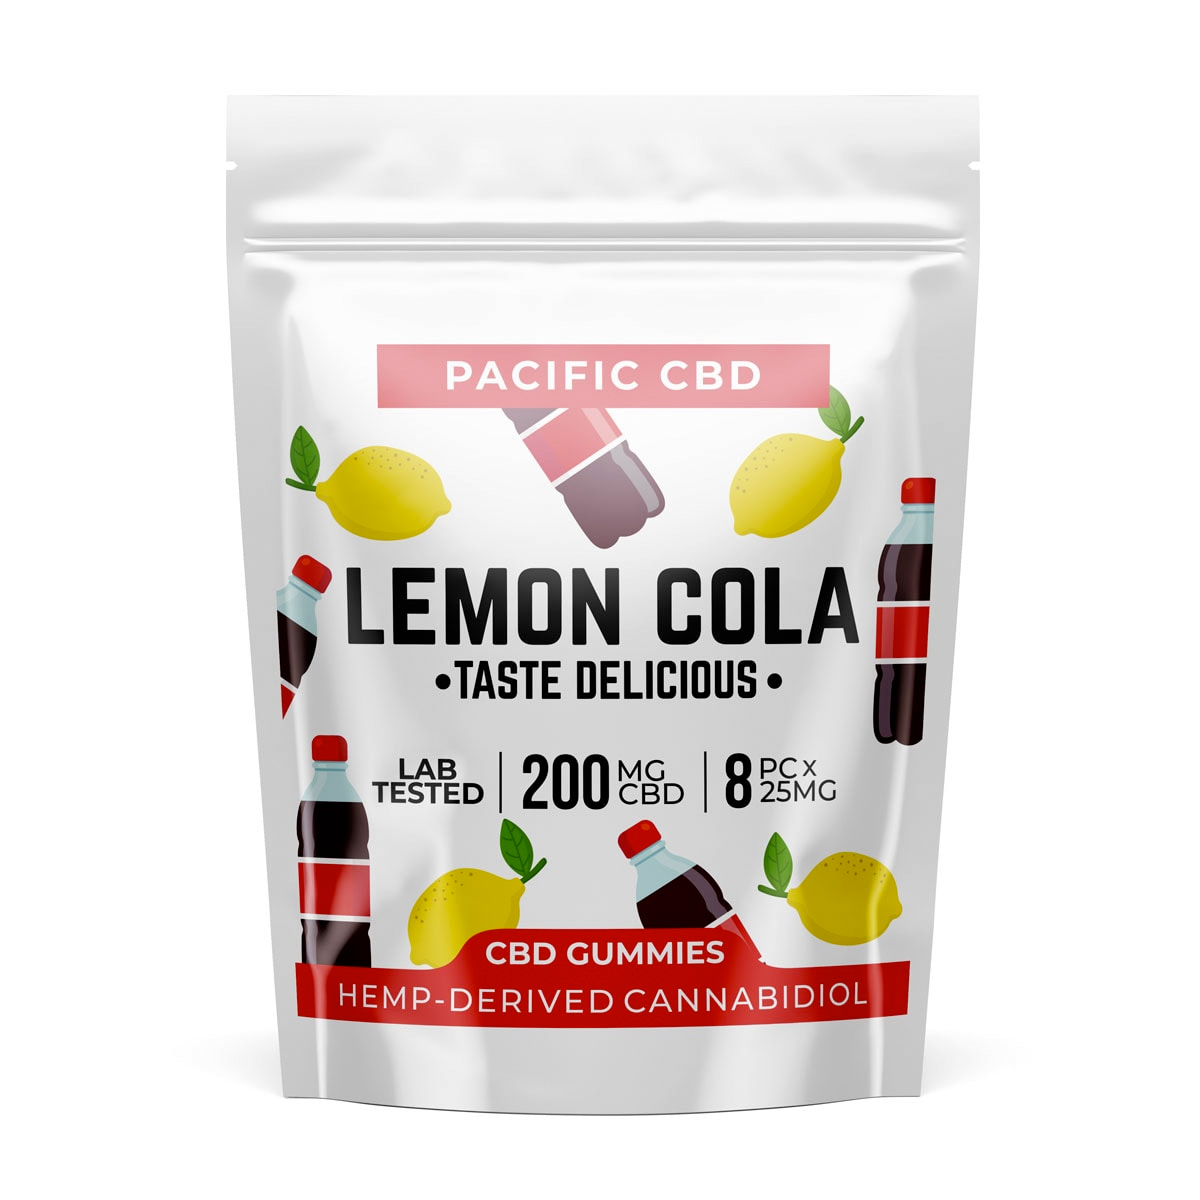 Buy Pacific CBD Lemon Cola 200mg Online